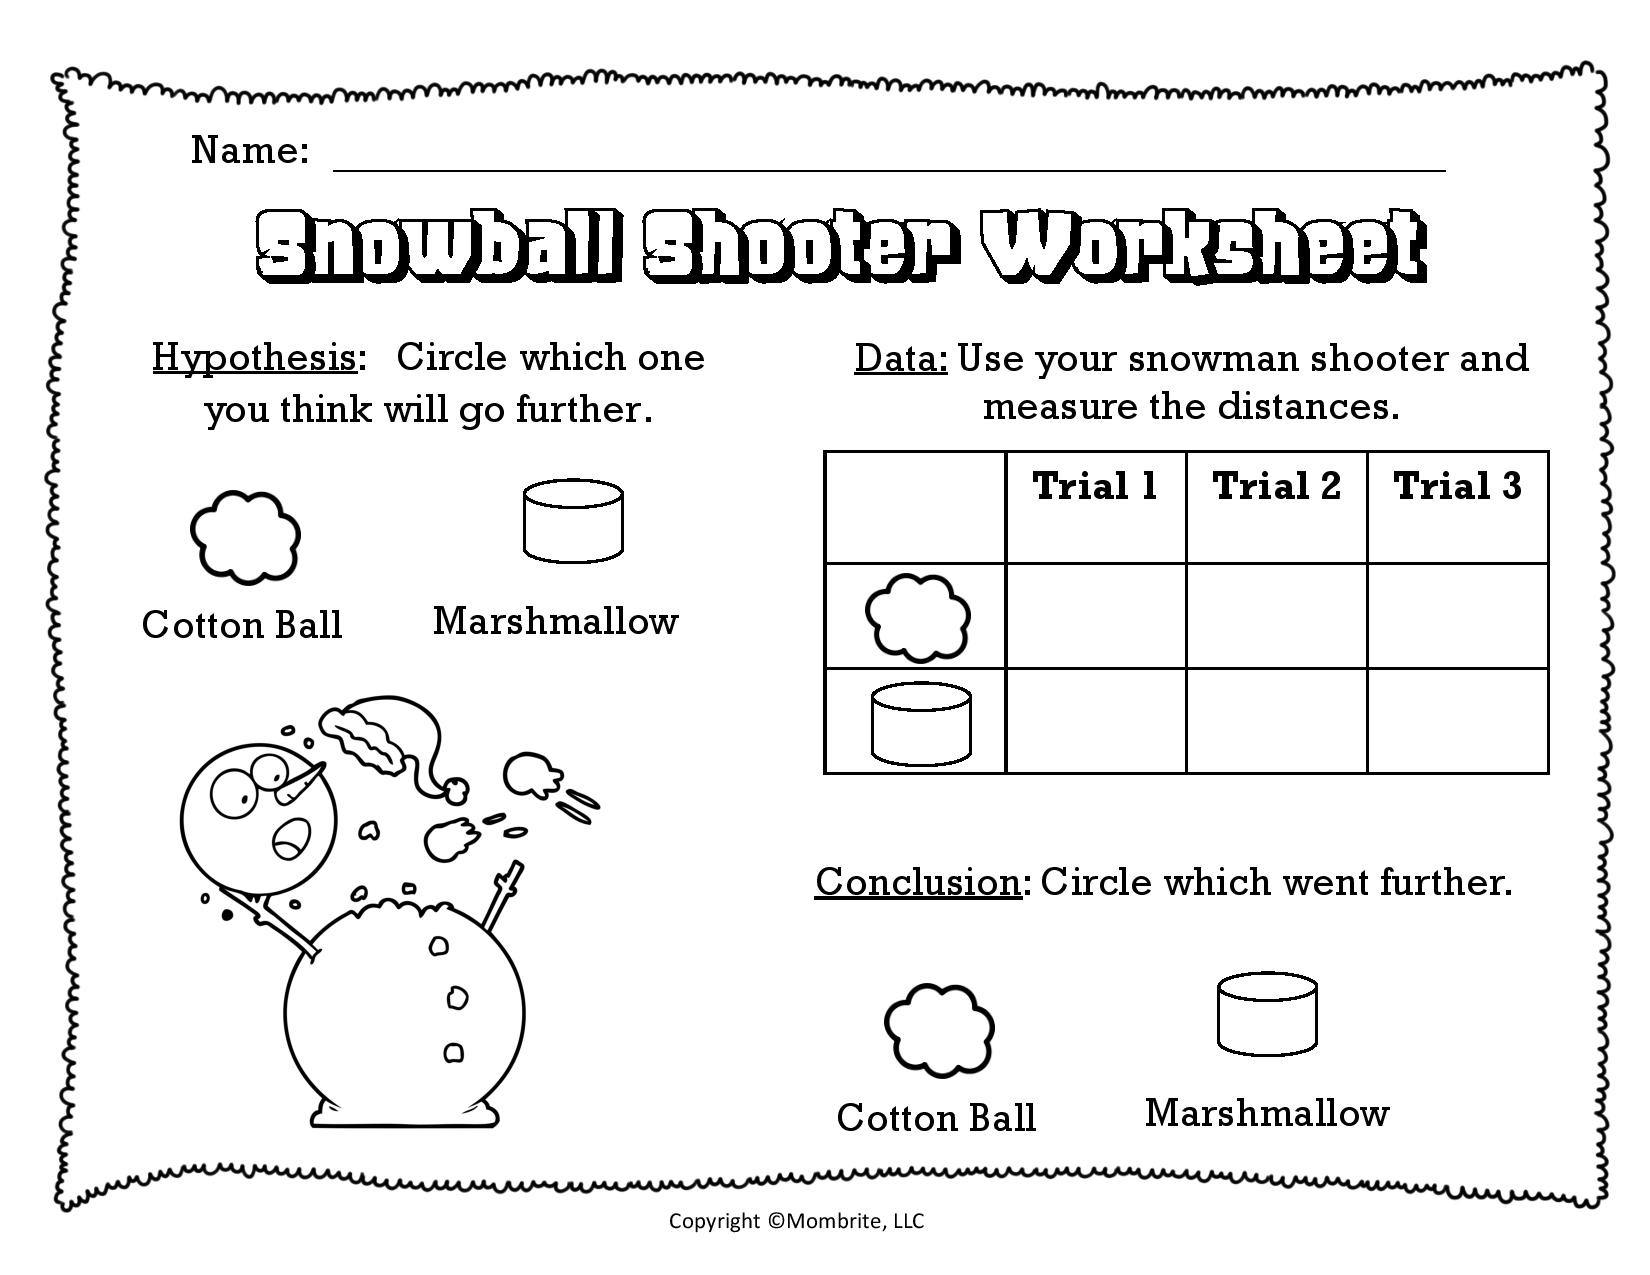 Free Snowball Shooter Worksheet